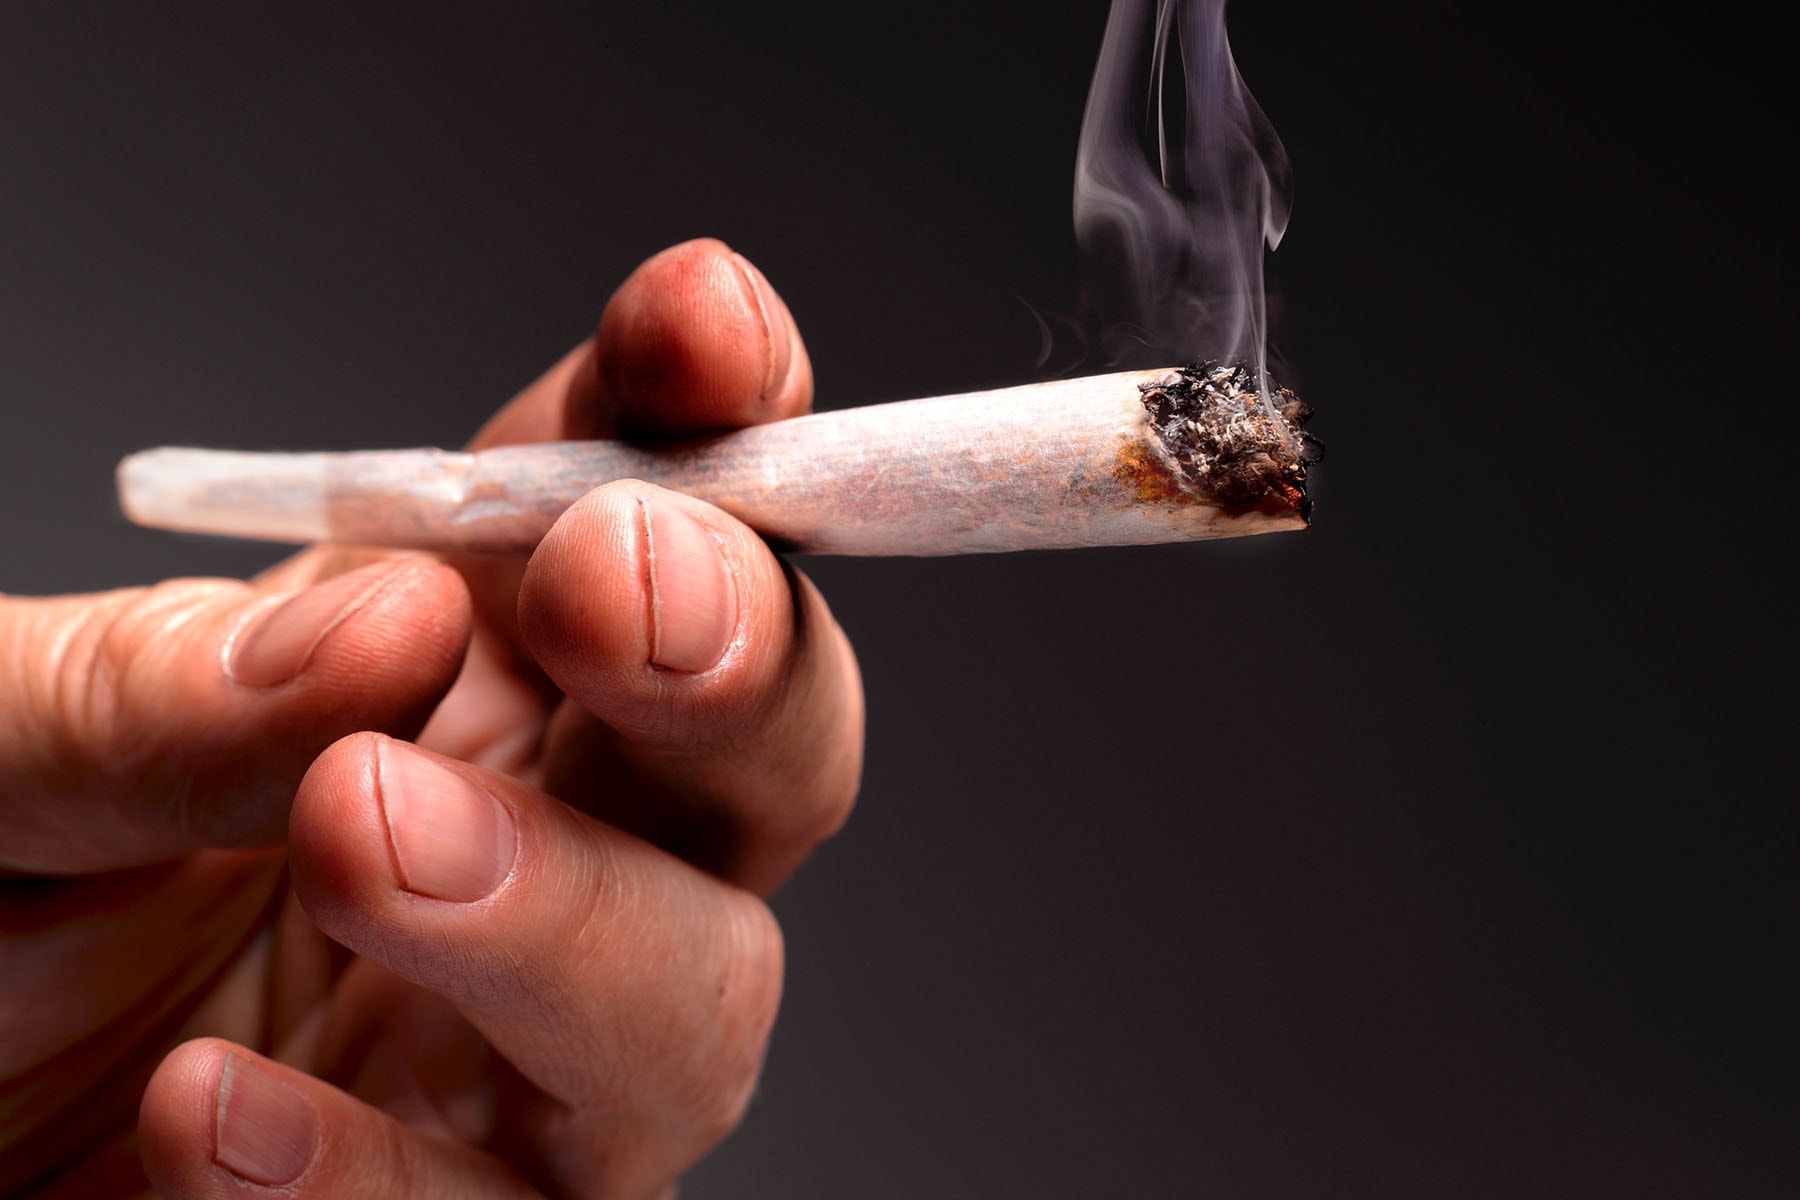 CNN 報導丹麥研究指出服用大麻與精神分裂症之間聯繫呈上升趨勢